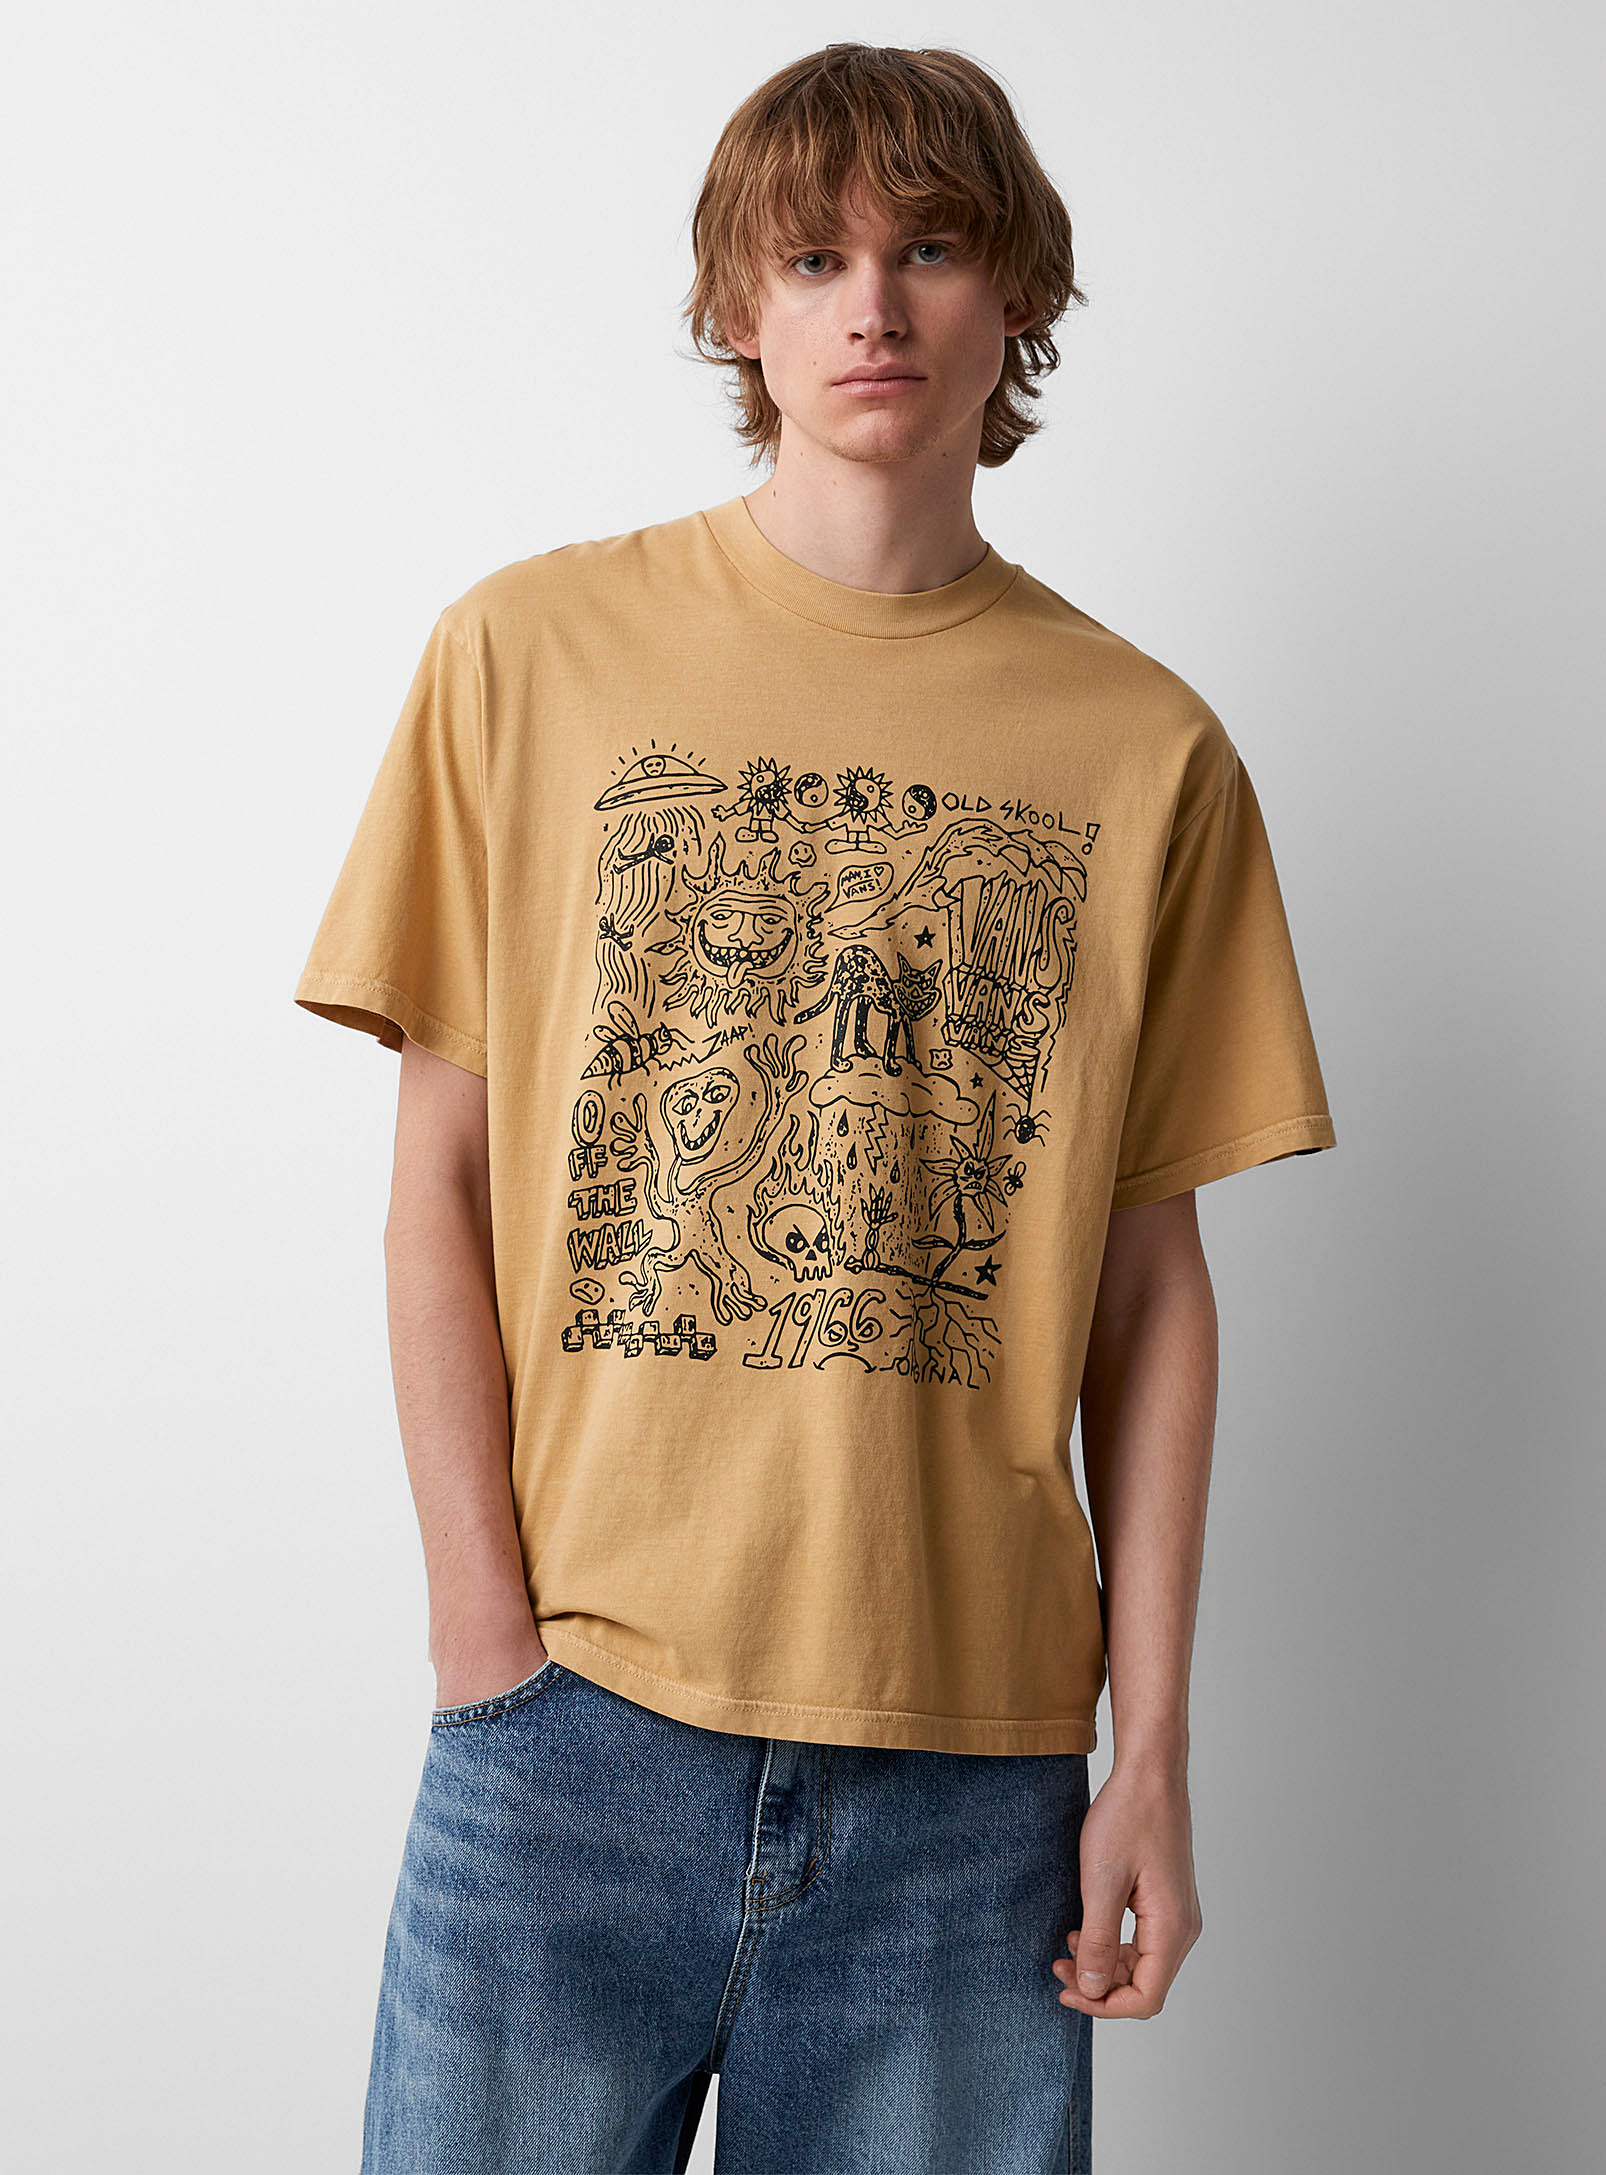 Vans - Men's Spooky doodle T-shirt